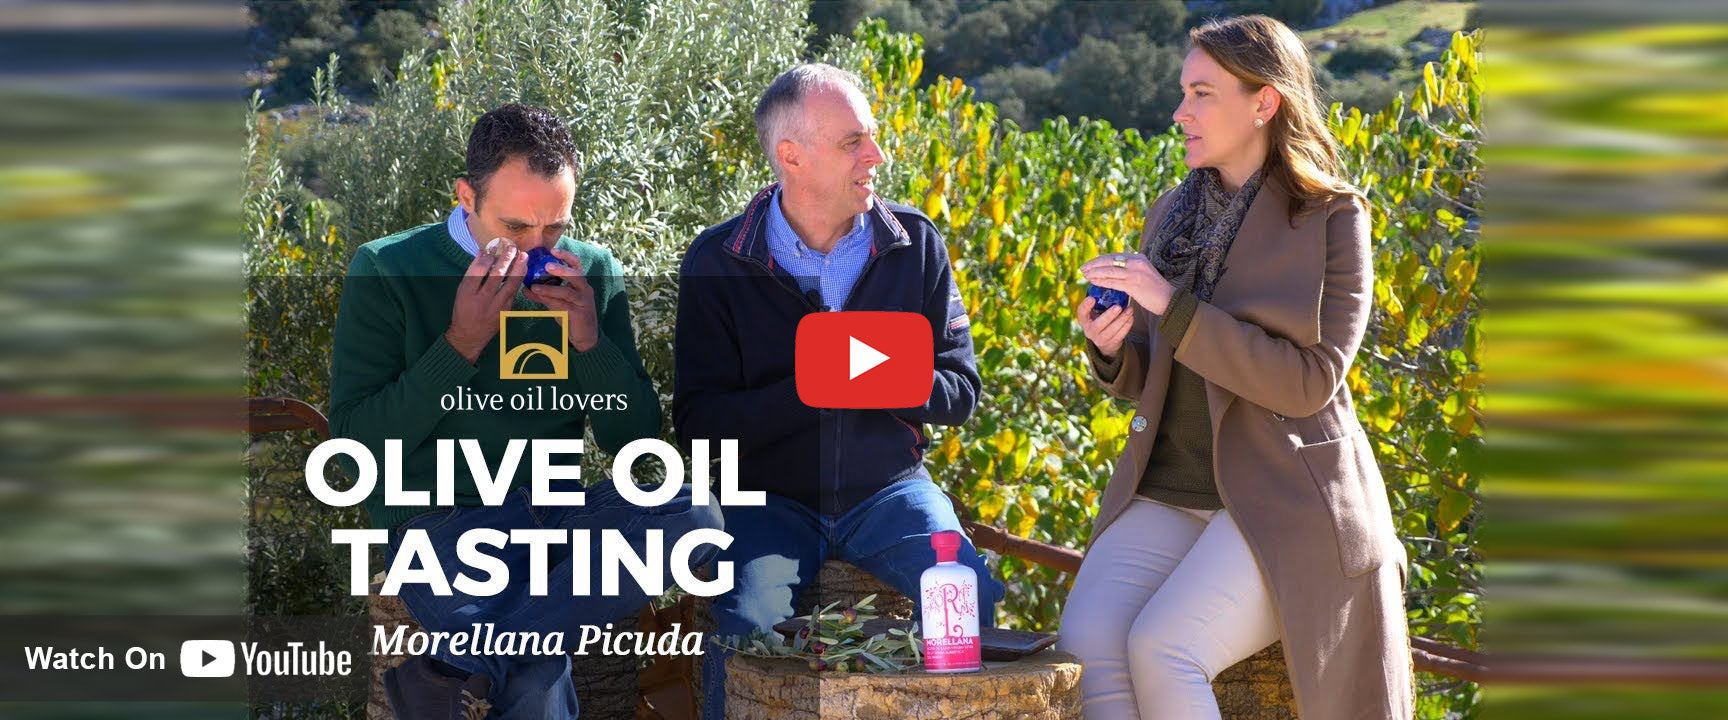 Joanne Lacina tastes olive oil with Alberto del Moral Lopez and Marco at the SHL estate.